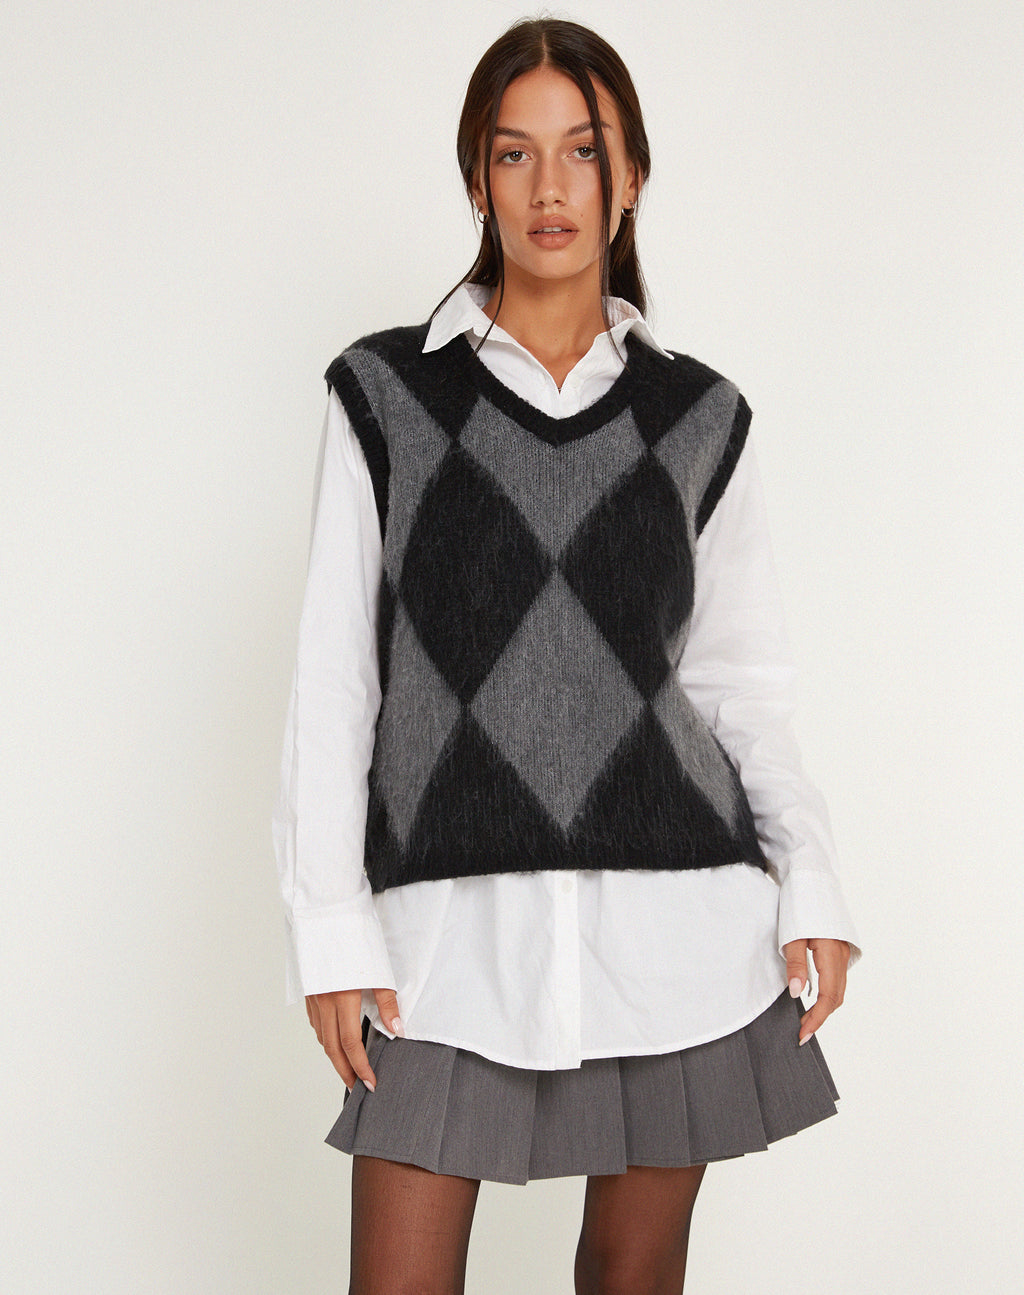 Arisa Sweater Vest in Harlequin Grey and Black